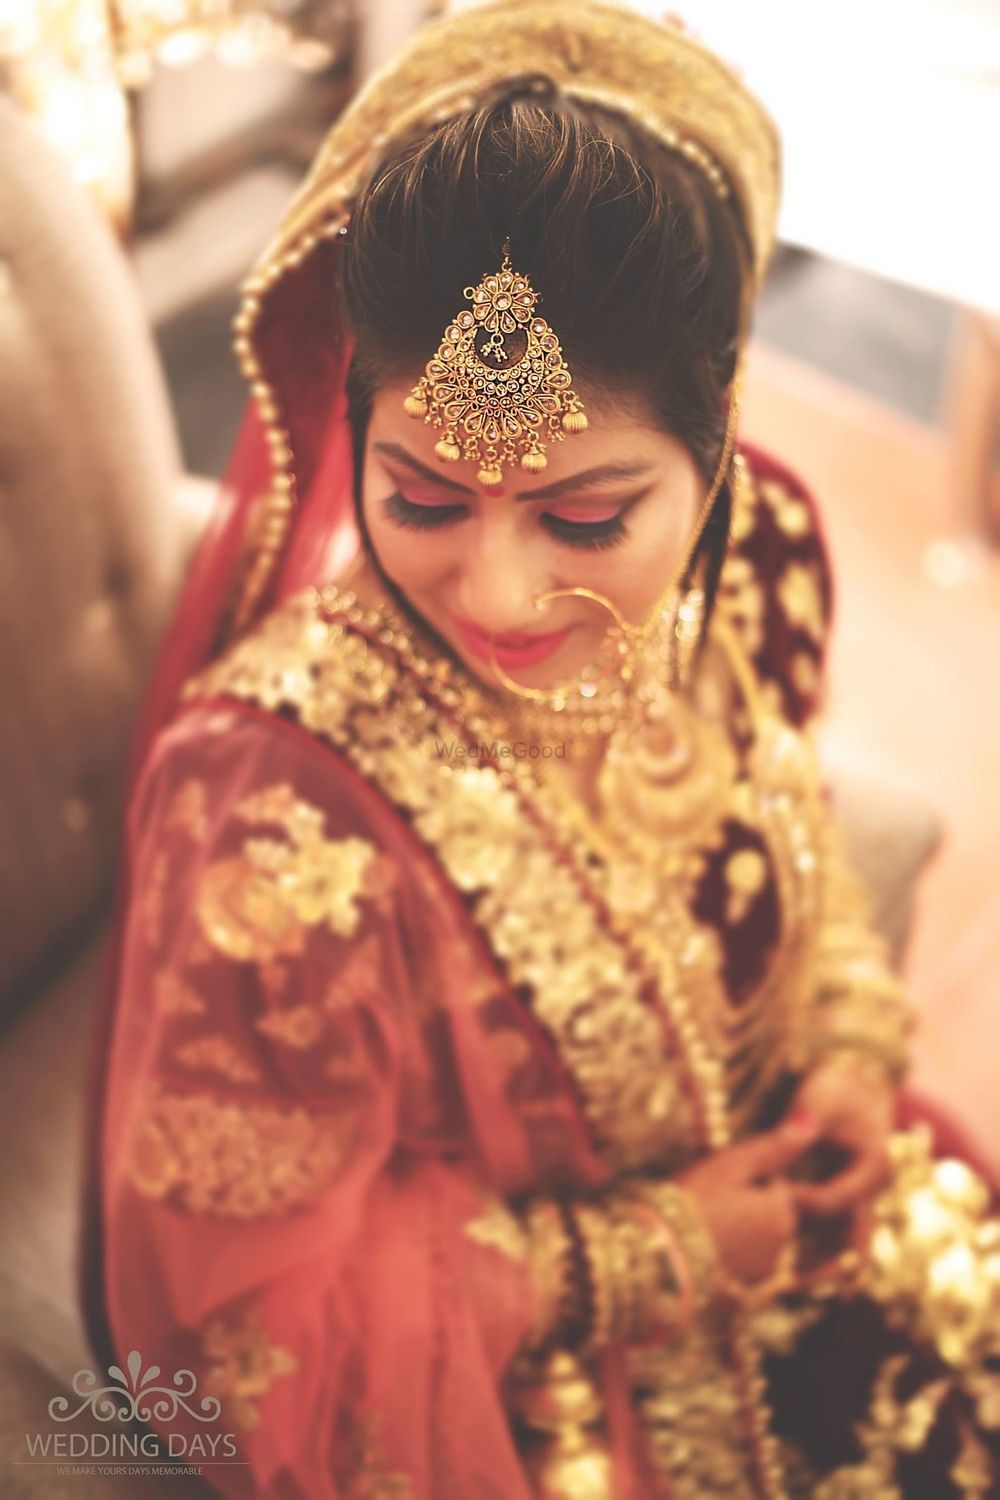 Photo From wedding days of Shikha Bhandaari  - By Wedding Days